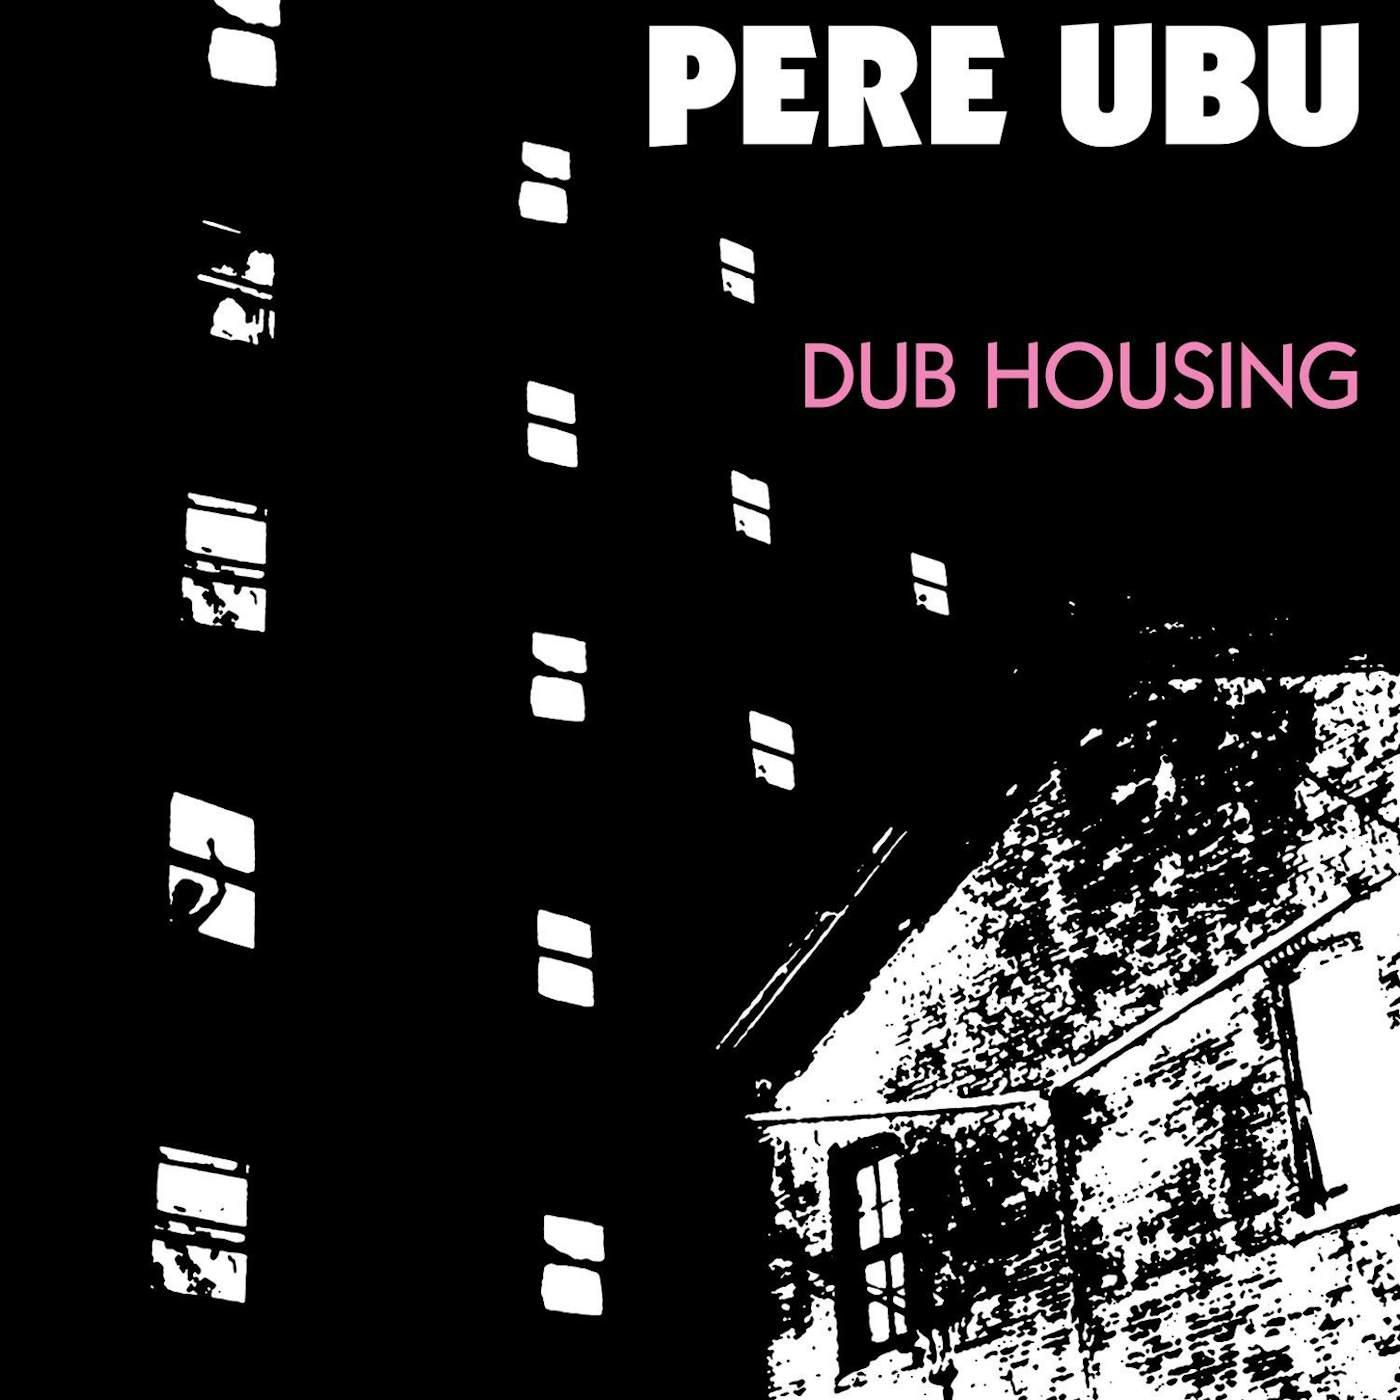 Pere Ubu Dub Housing Vinyl Record